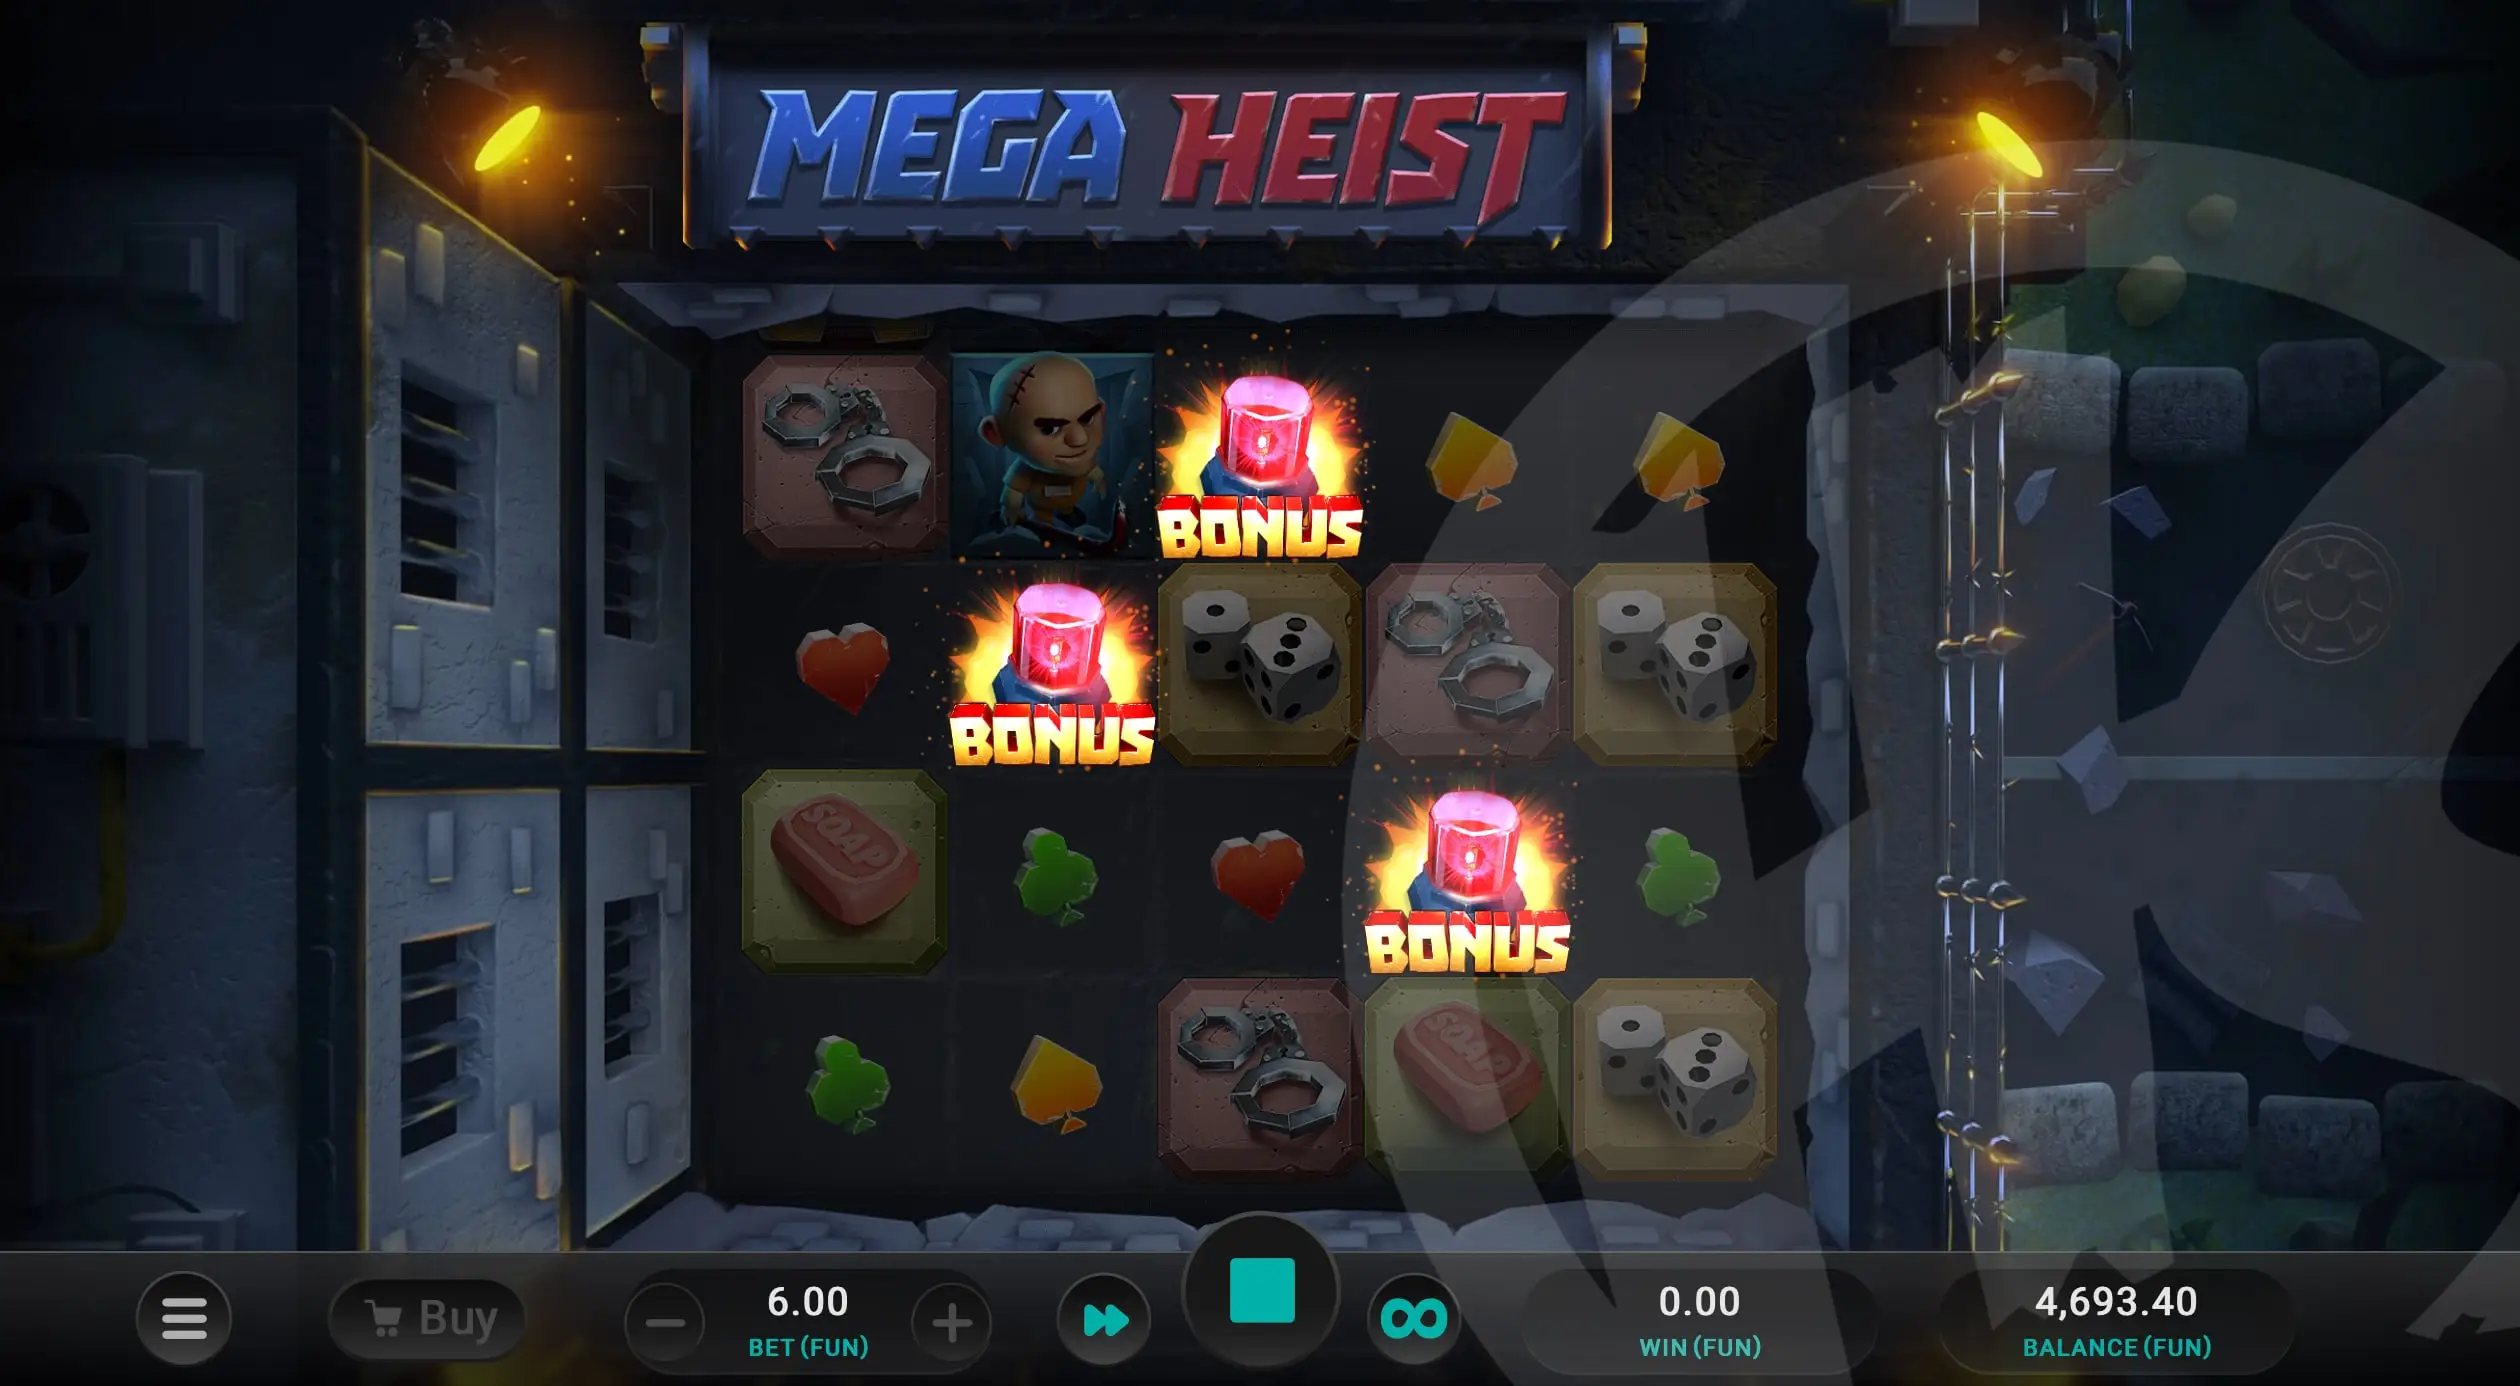 Land 3 Bonus Symbols to Trigger the Mega Heist Bonus